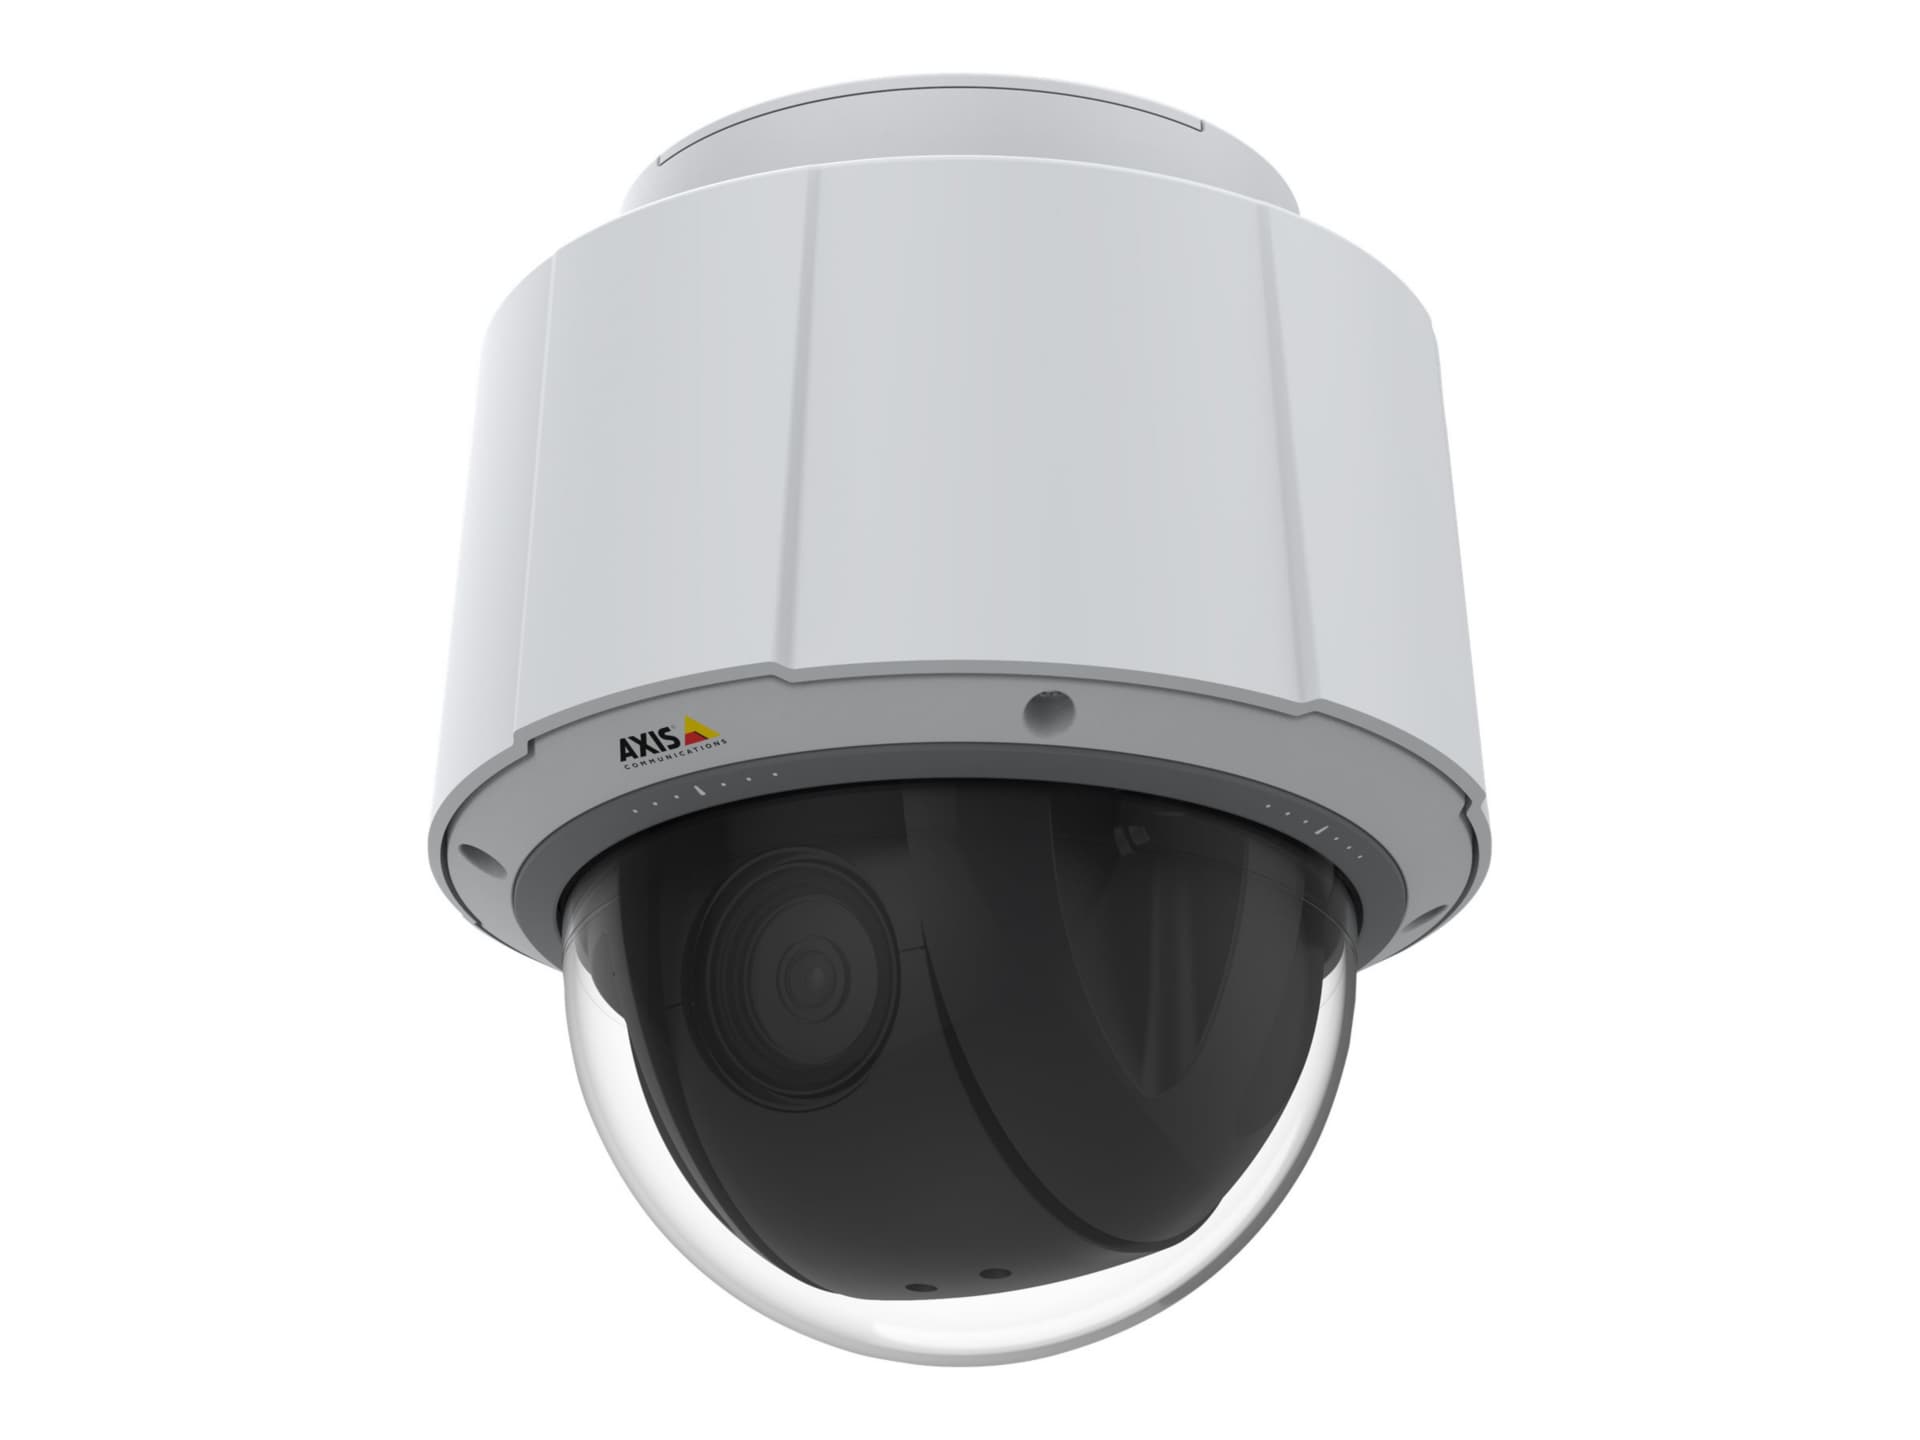 AXIS Q6075 60 Hz - network surveillance camera